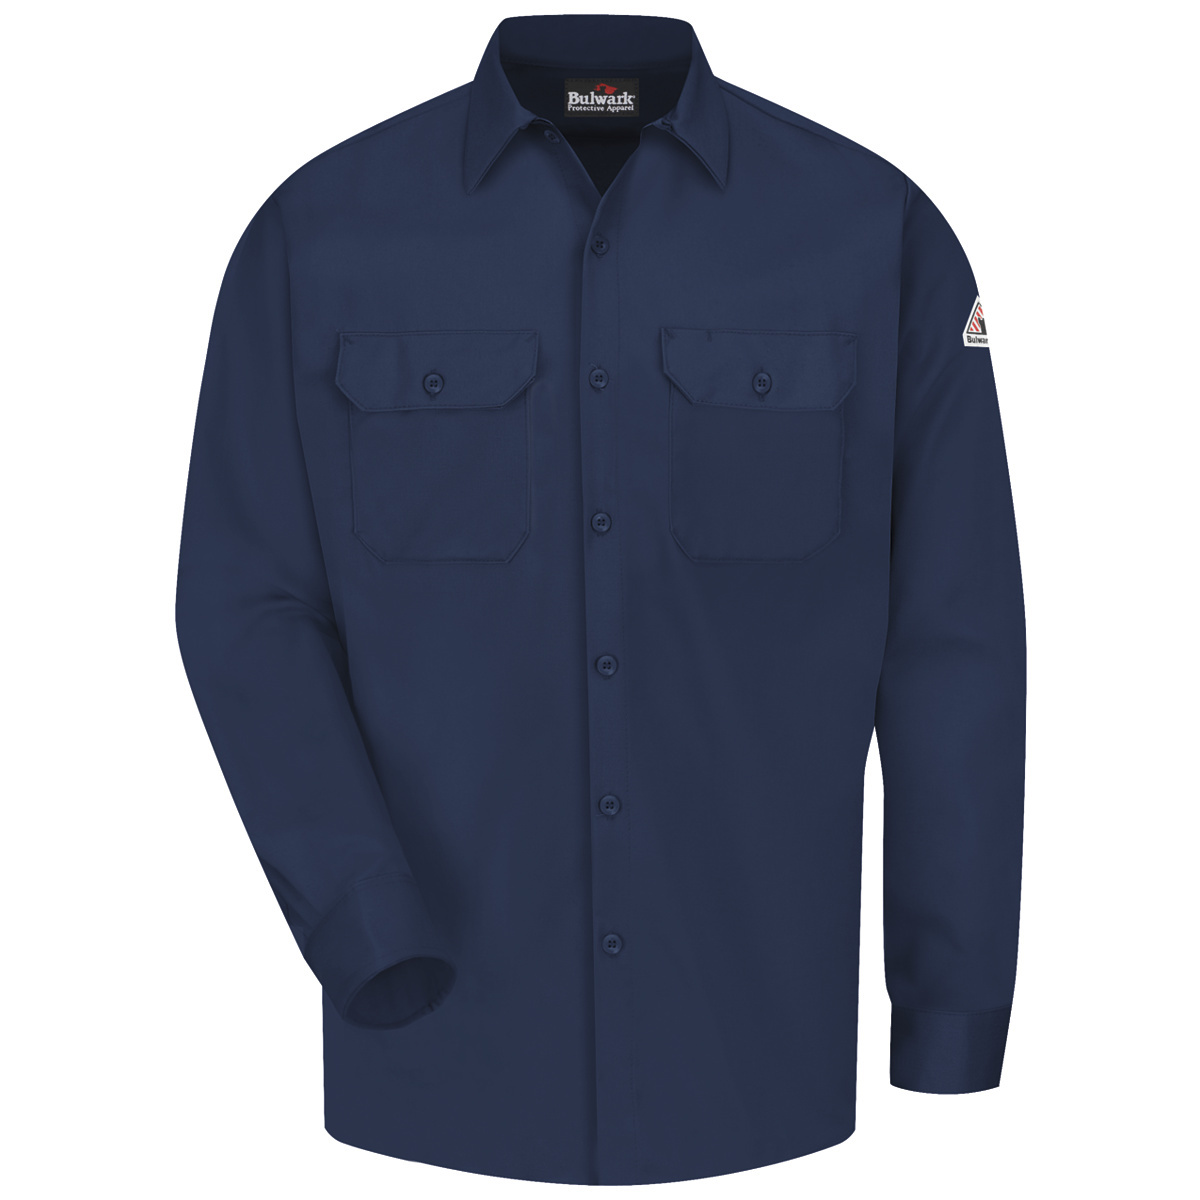 Bulwark® Medium Regular Navy Blue Westex Ultrasoft®/Cotton/Nylon Flame Resistant Work Shirt With Button Front Closure